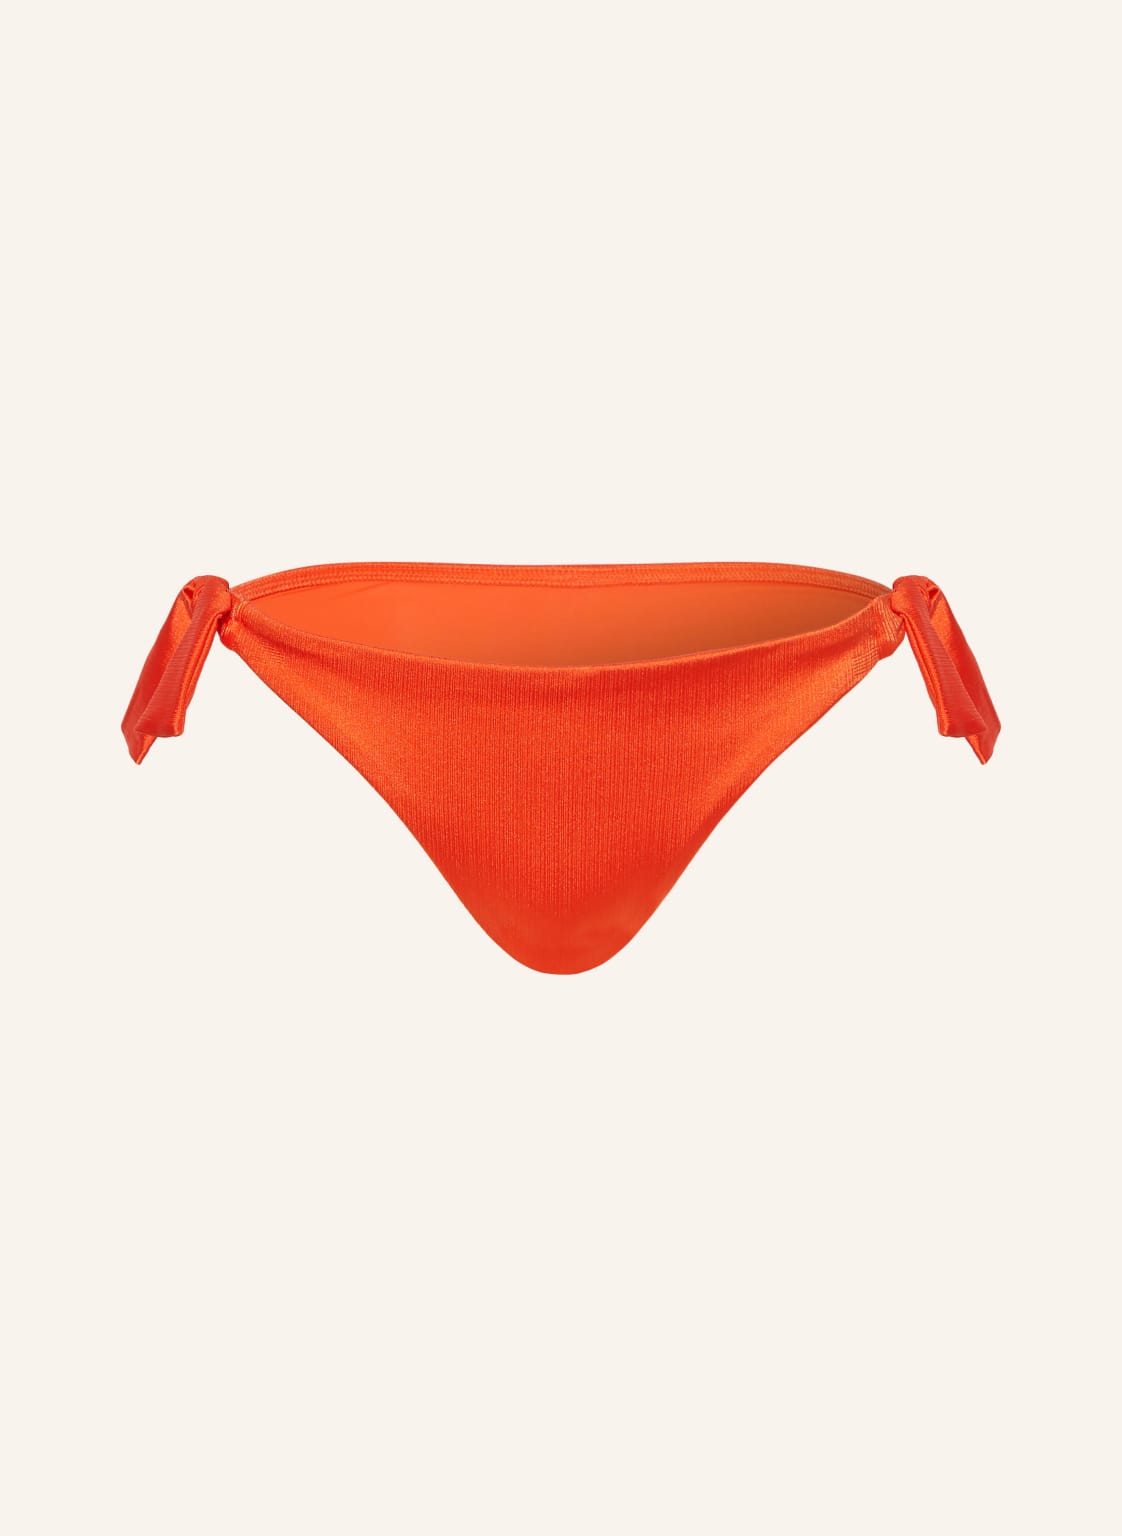 Cyell Triangel-Bikini-Hose Satin Tomato rot von CYELL